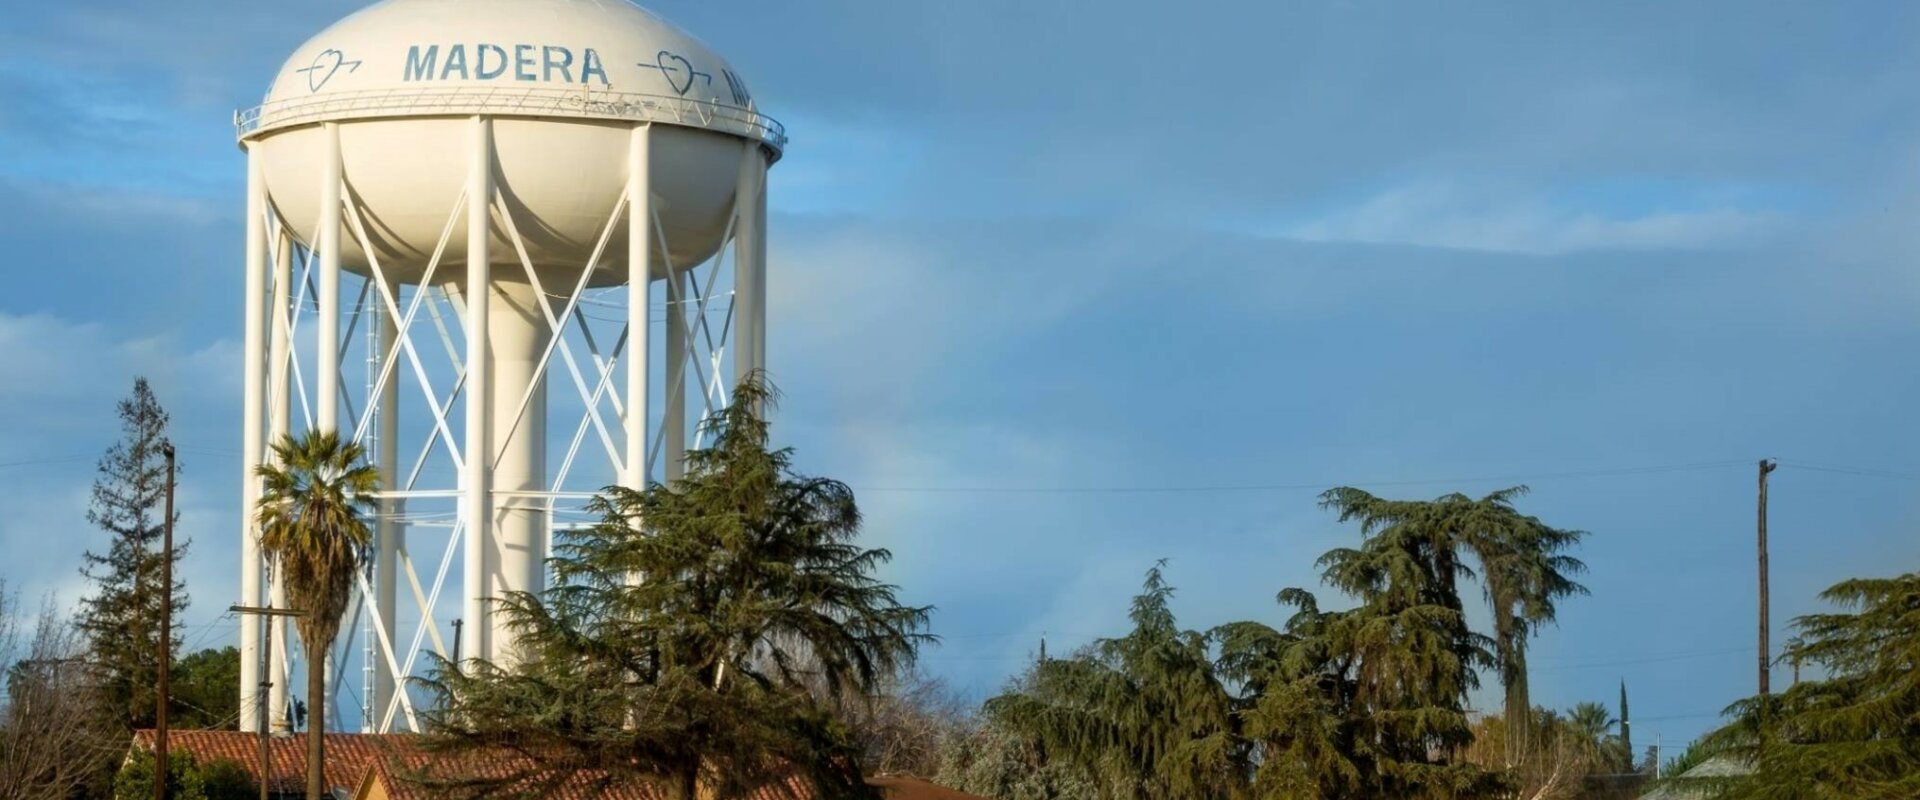 Madera water tower in California